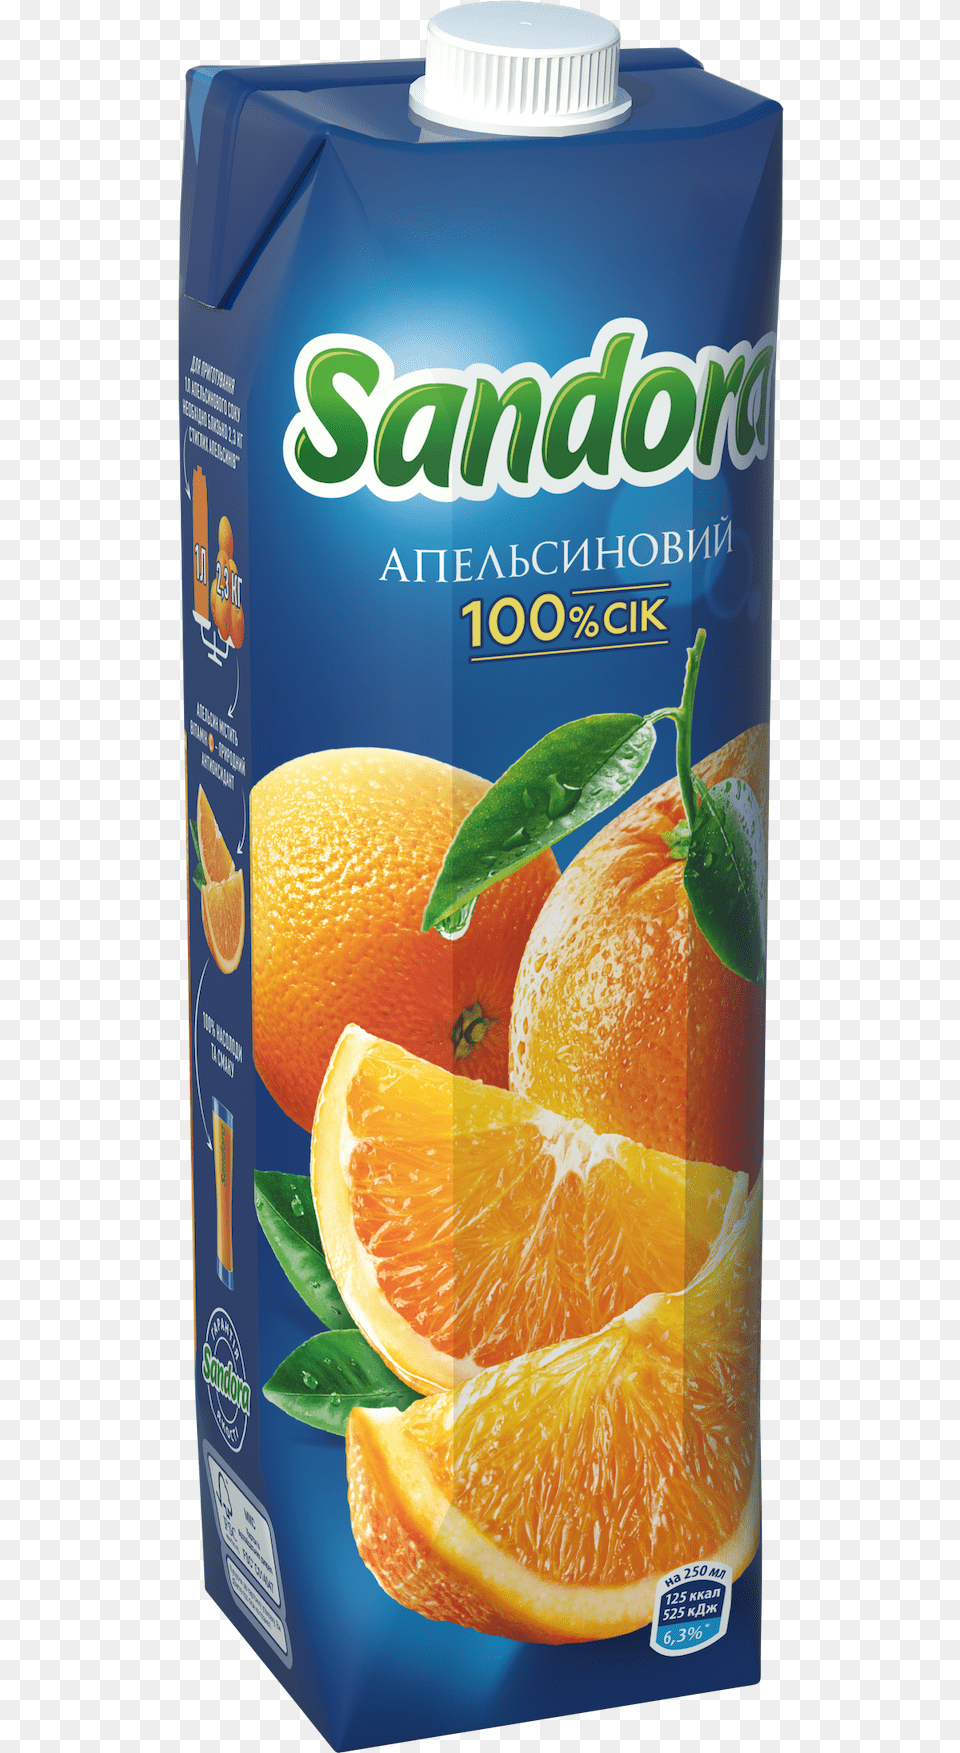 Apelsinovij Sok Sandora, Beverage, Juice, Food, Fruit Png Image